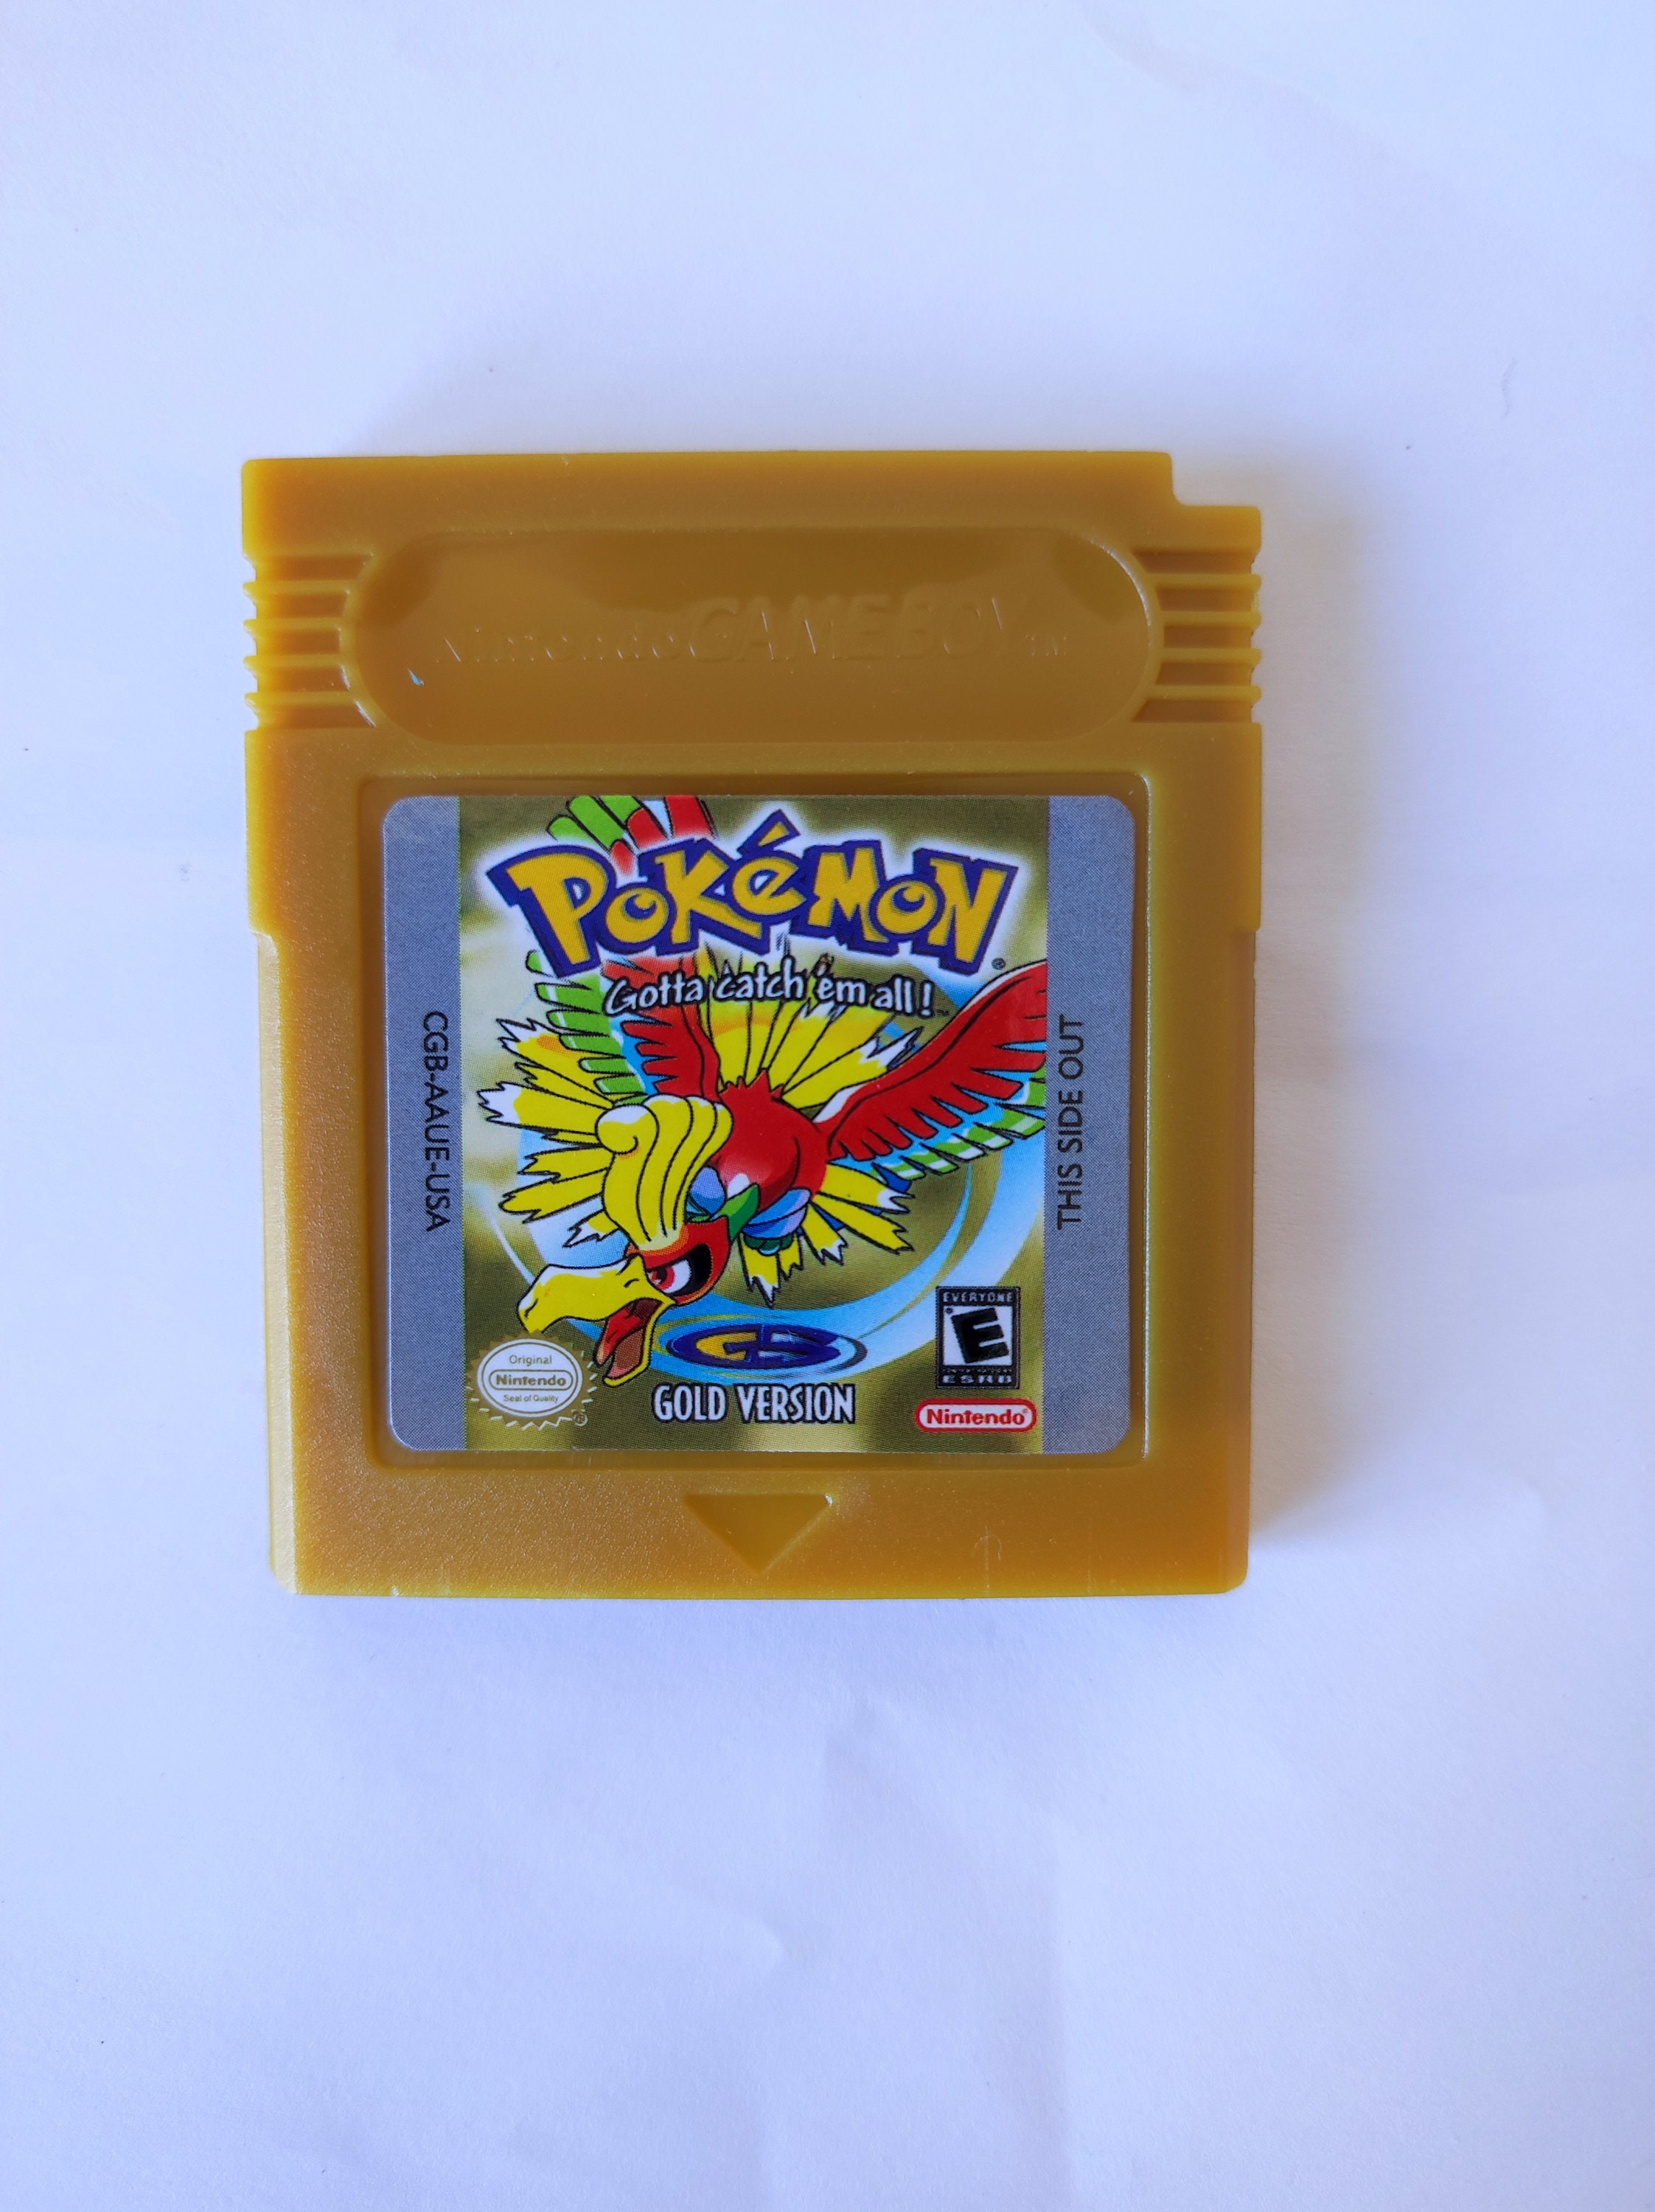 Nintendo Gameboy Color Pokemon Gold Version game Authentic Cartridge Vintage